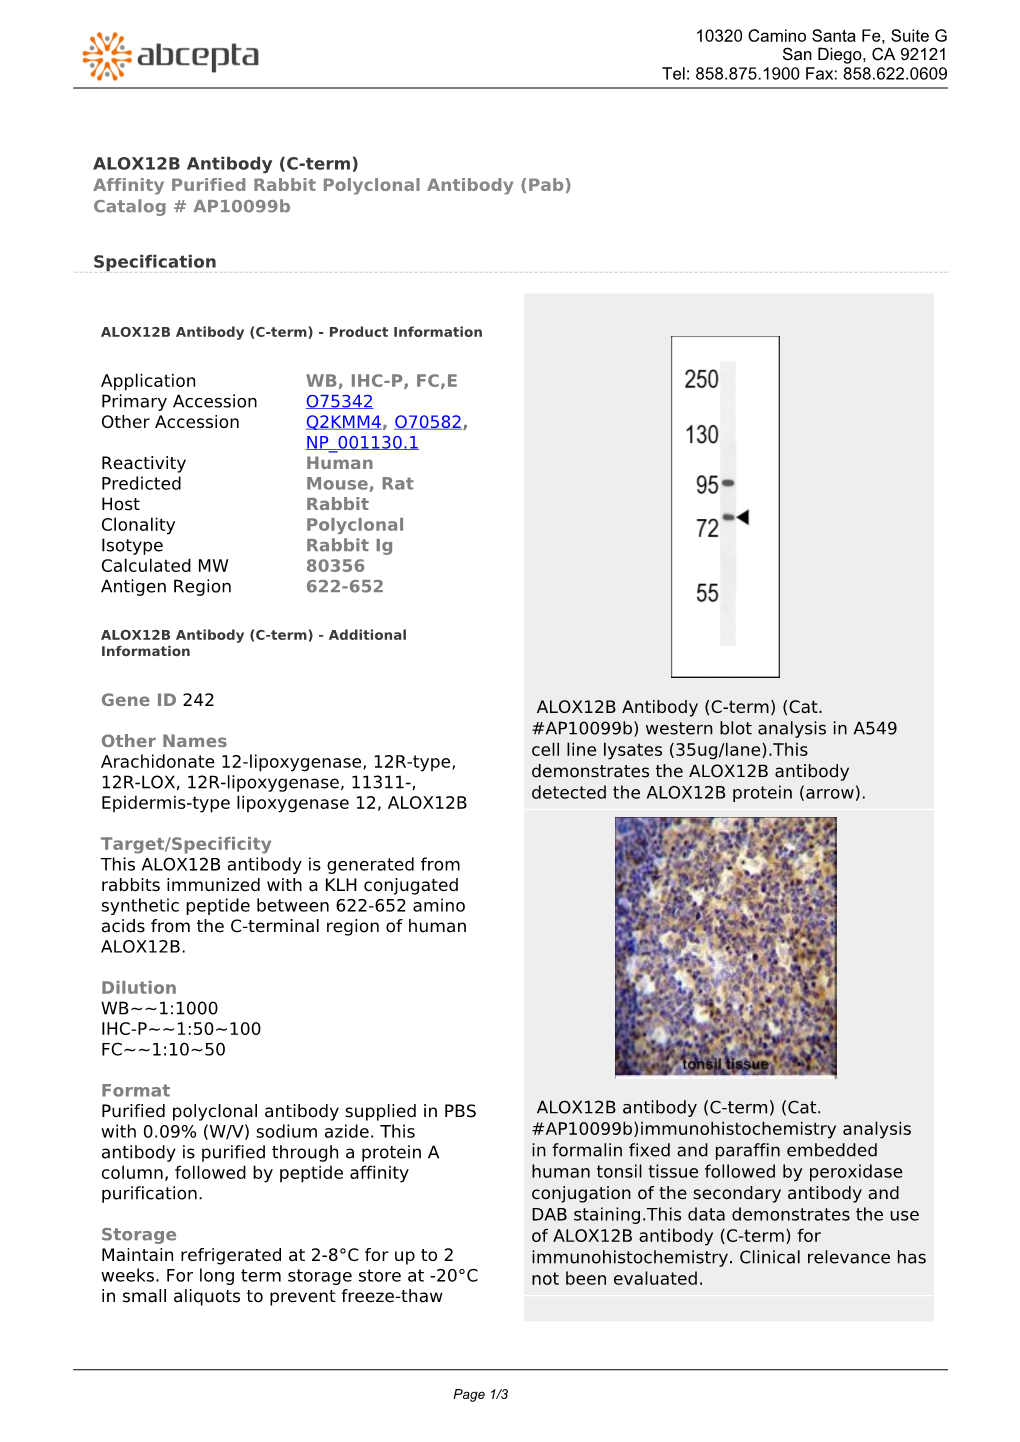 ALOX12B Antibody (C-Term) Affinity Purified Rabbit Polyclonal Antibody (Pab) Catalog # Ap10099b